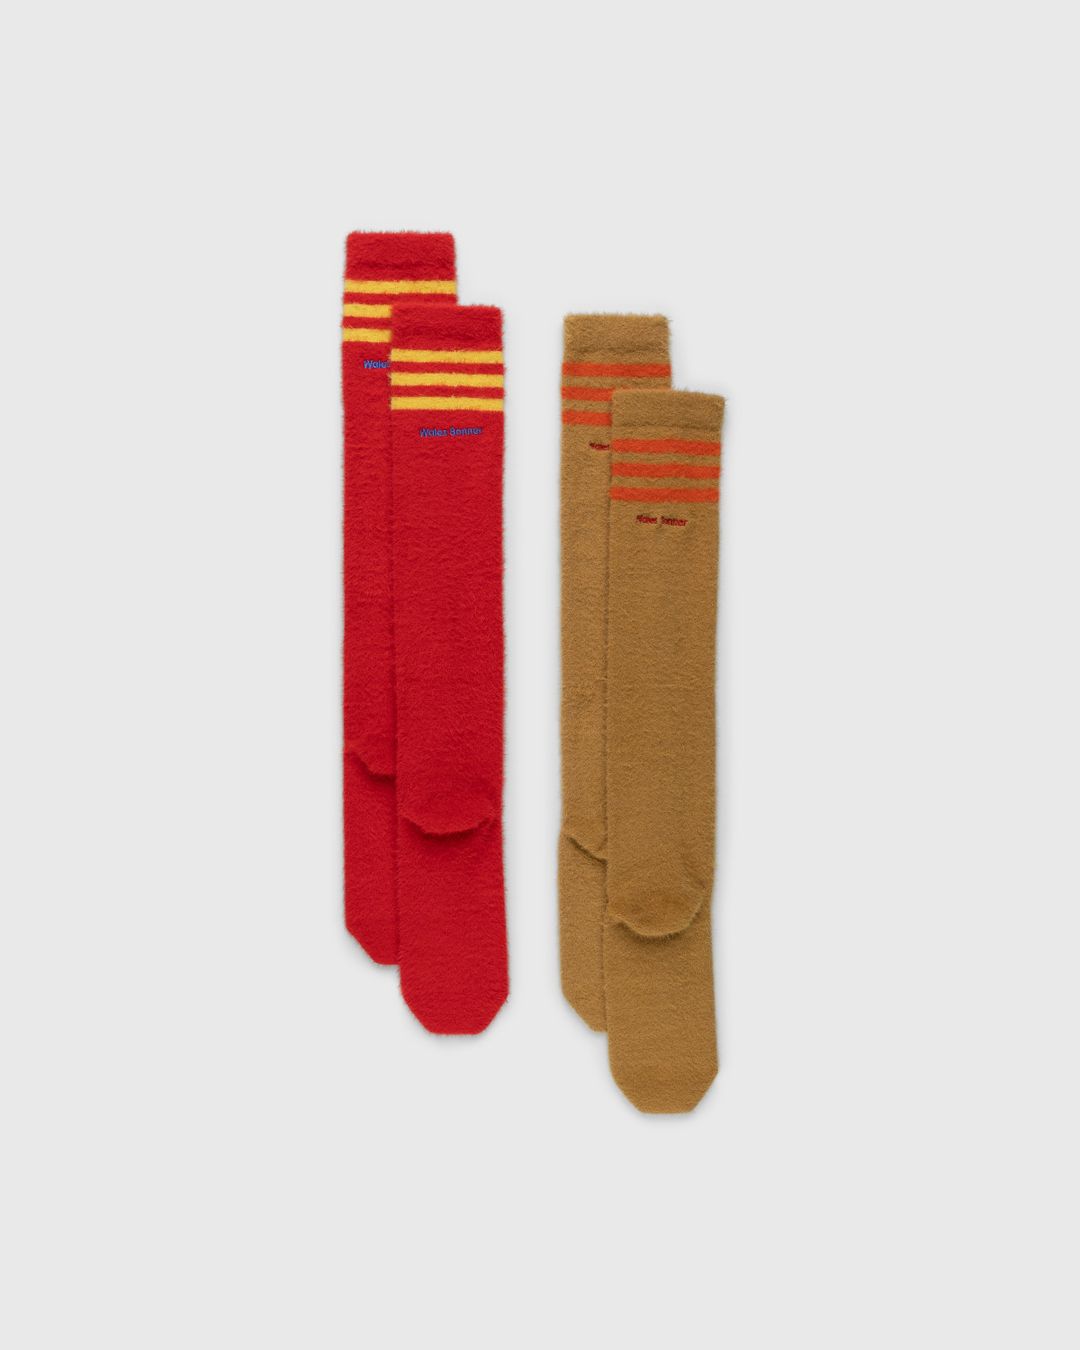 Adidas x Wales Bonner – WB Socks Scarlet/Mesa | Highsnobiety Shop